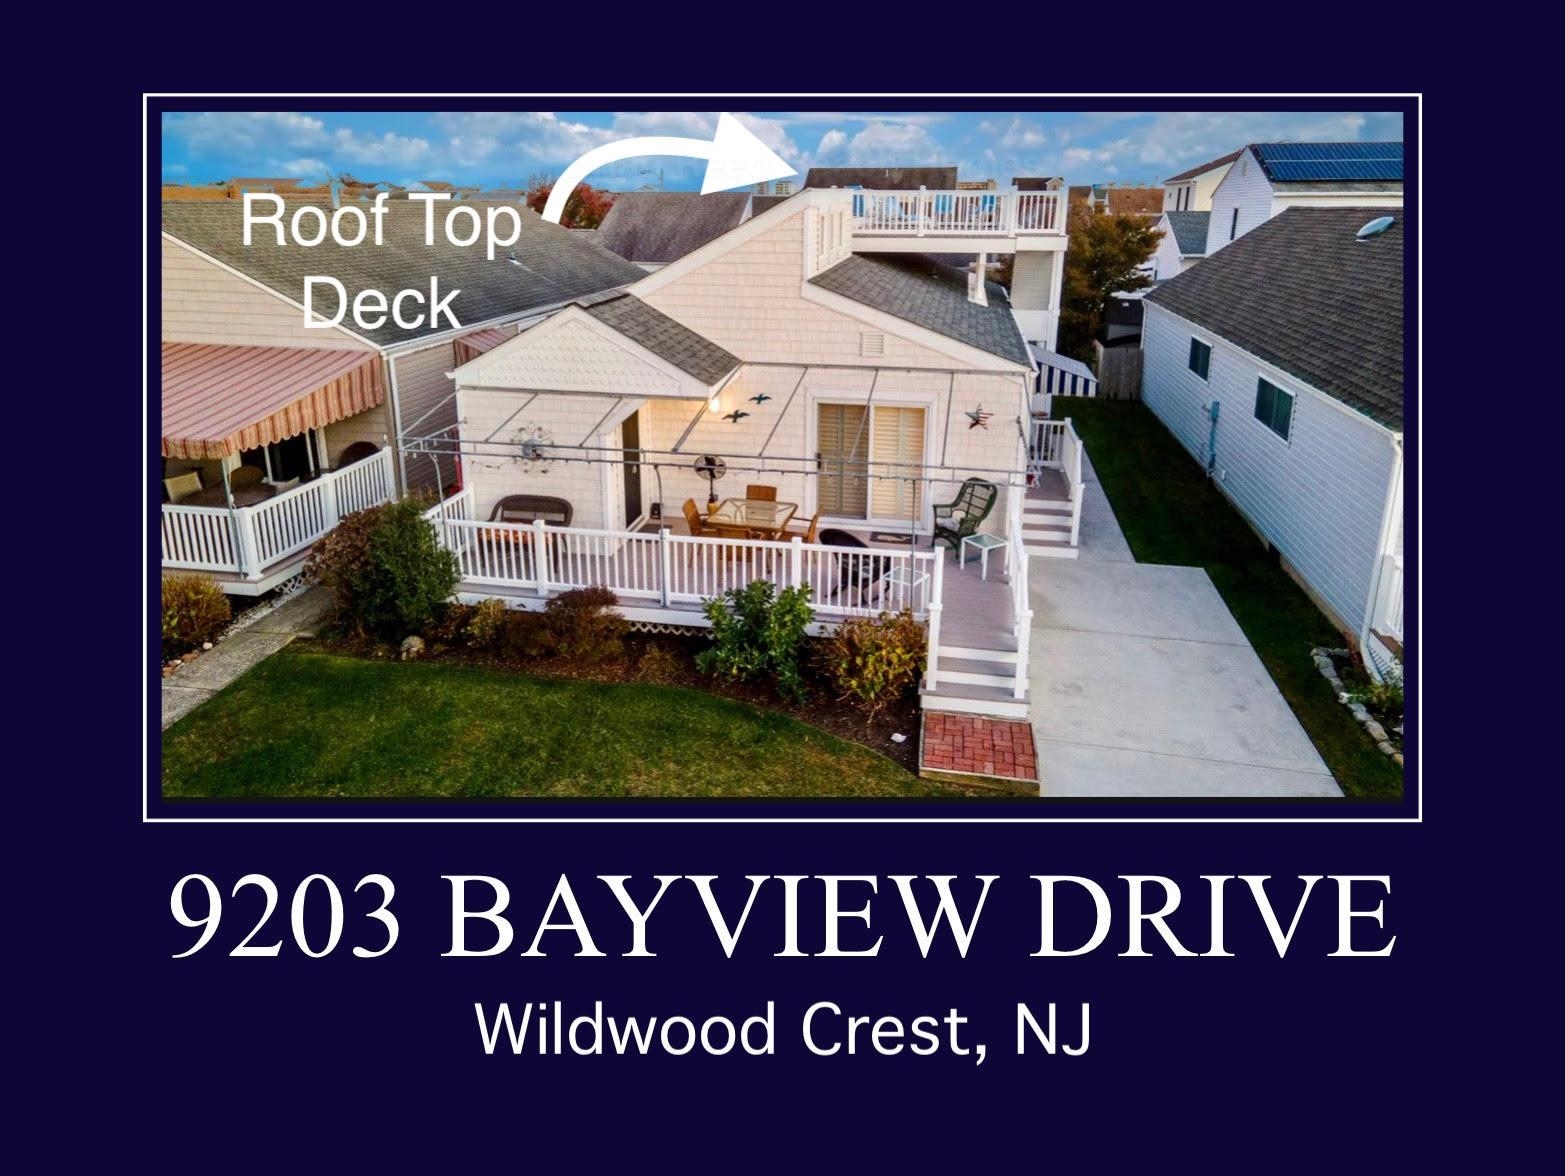 9203 Bayview Drive - Wildwood Crest